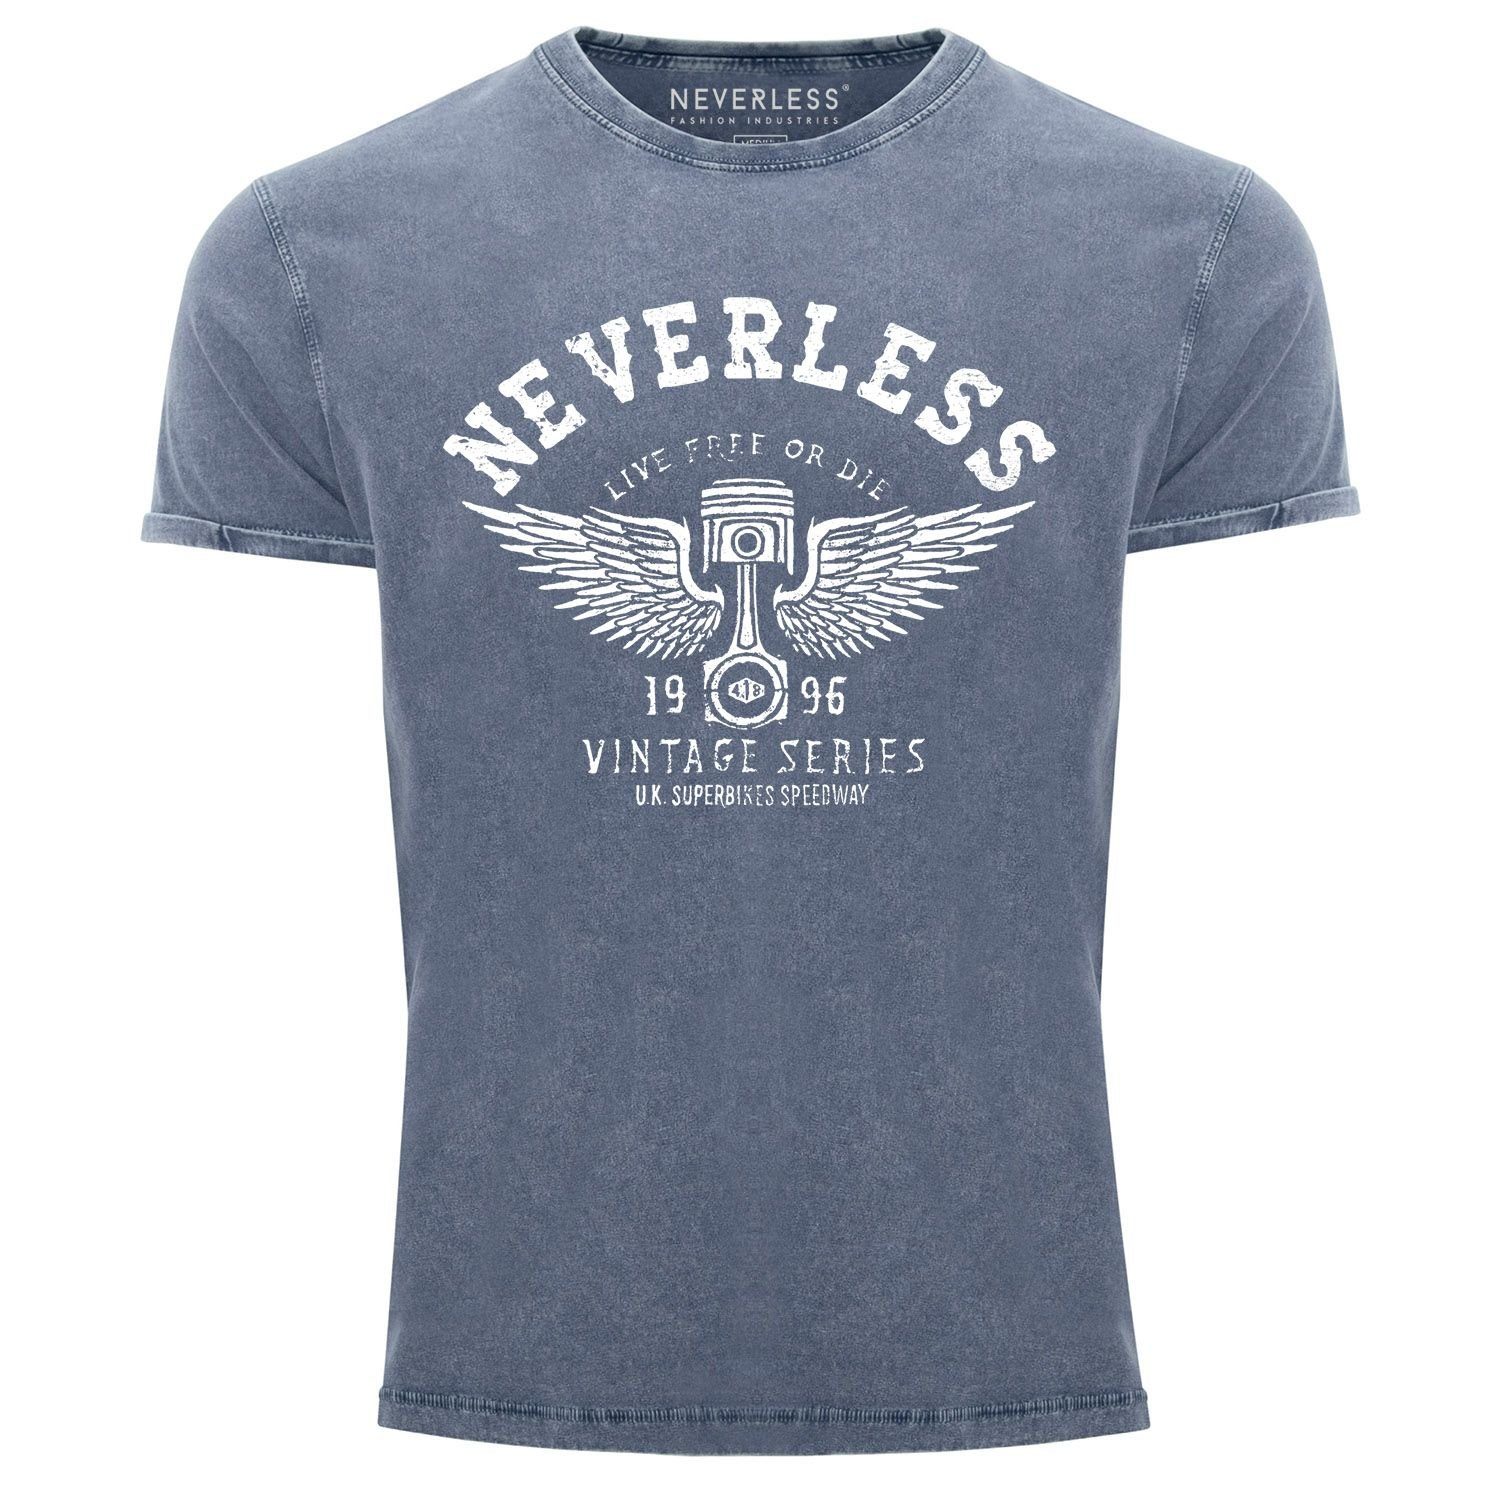 Neverless Print-Shirt Cooles Angesagtes Herren T-Shirt Vintage Shirt Retro Auto Kolben Used Look Slim Fit Neverless® mit Print blau